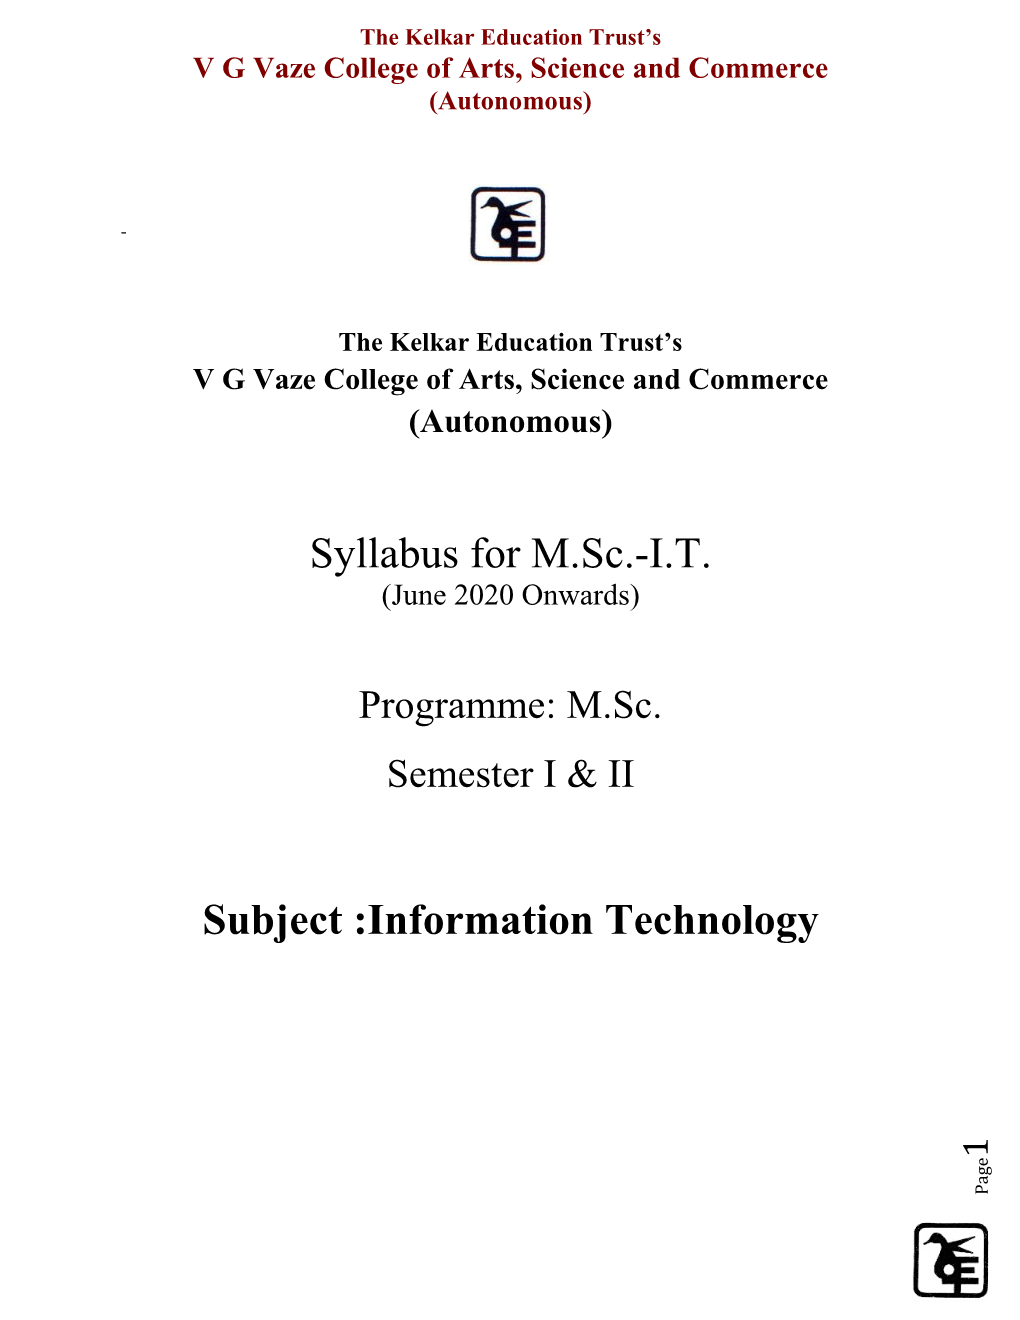 Syllabus for M.Sc.-IT Subject